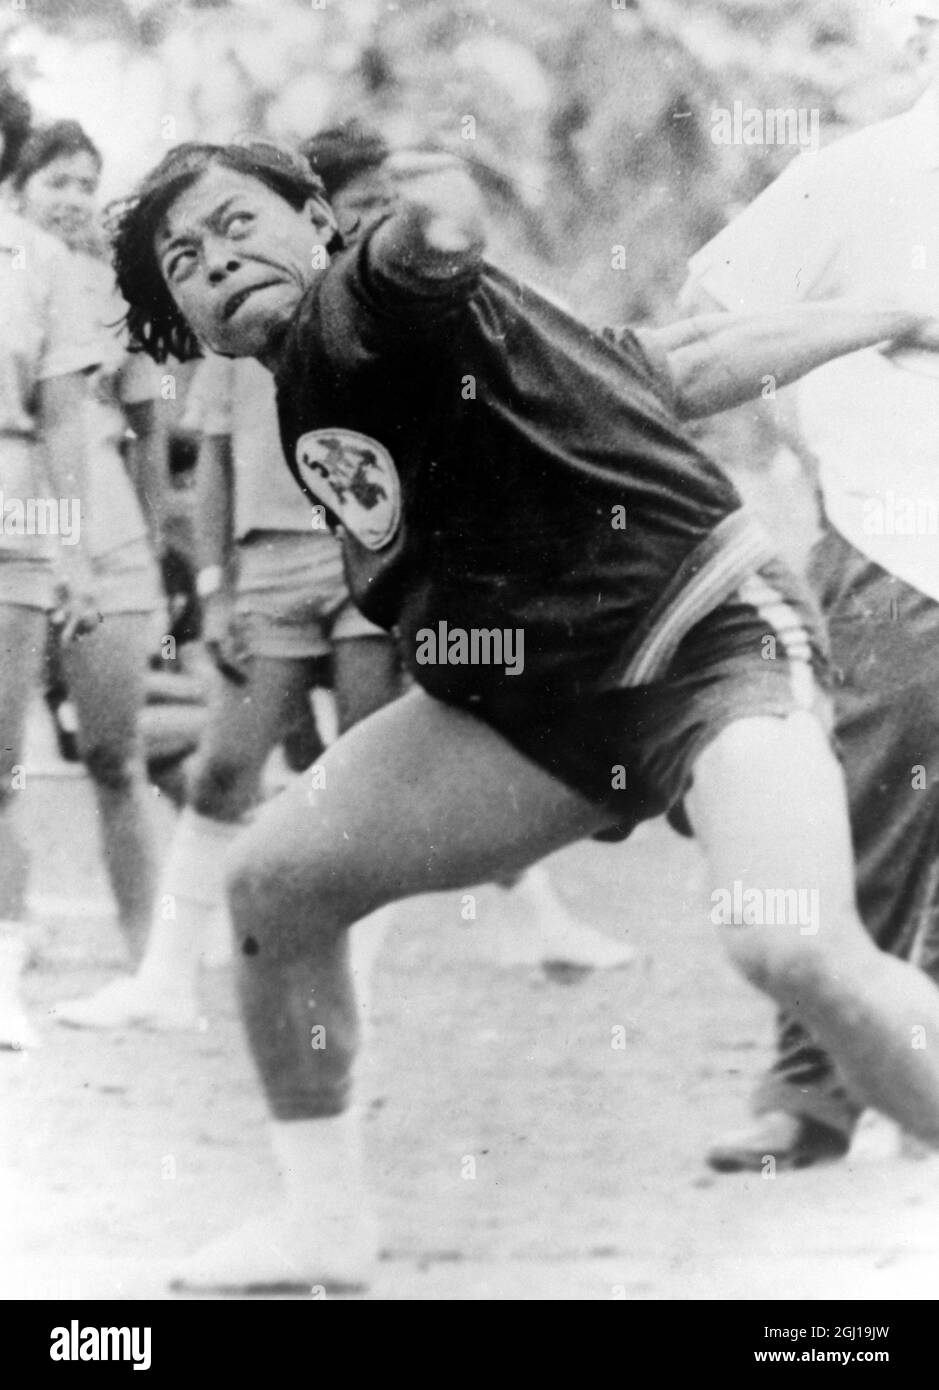 ATHLETICS MONA SULAIMAN HURLS DISCUS IN ACTION IN MANILA ; 7 APRIL 1964 Stock Photo